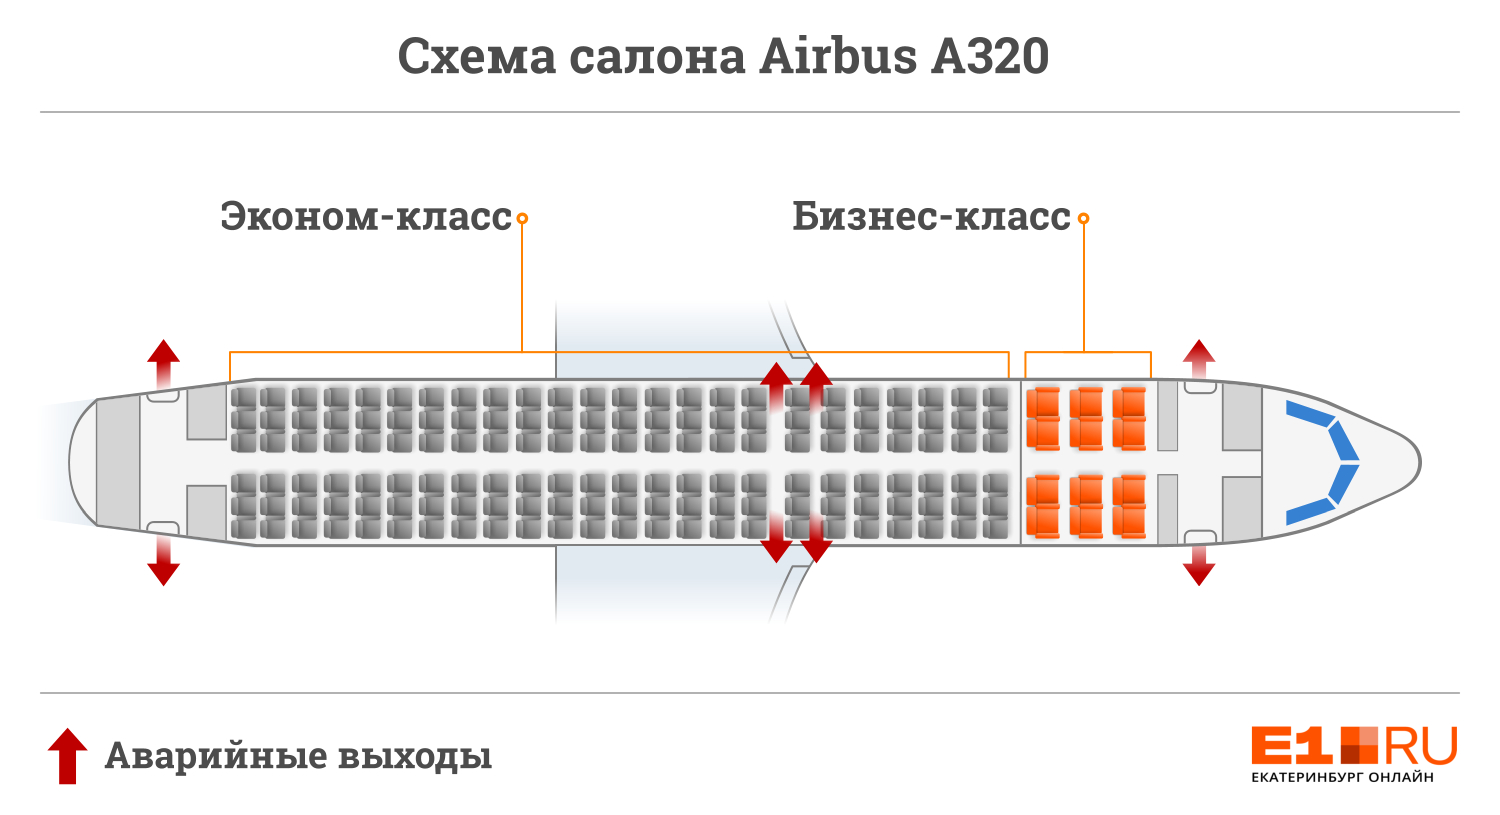 Схема самолета Аэробус а320